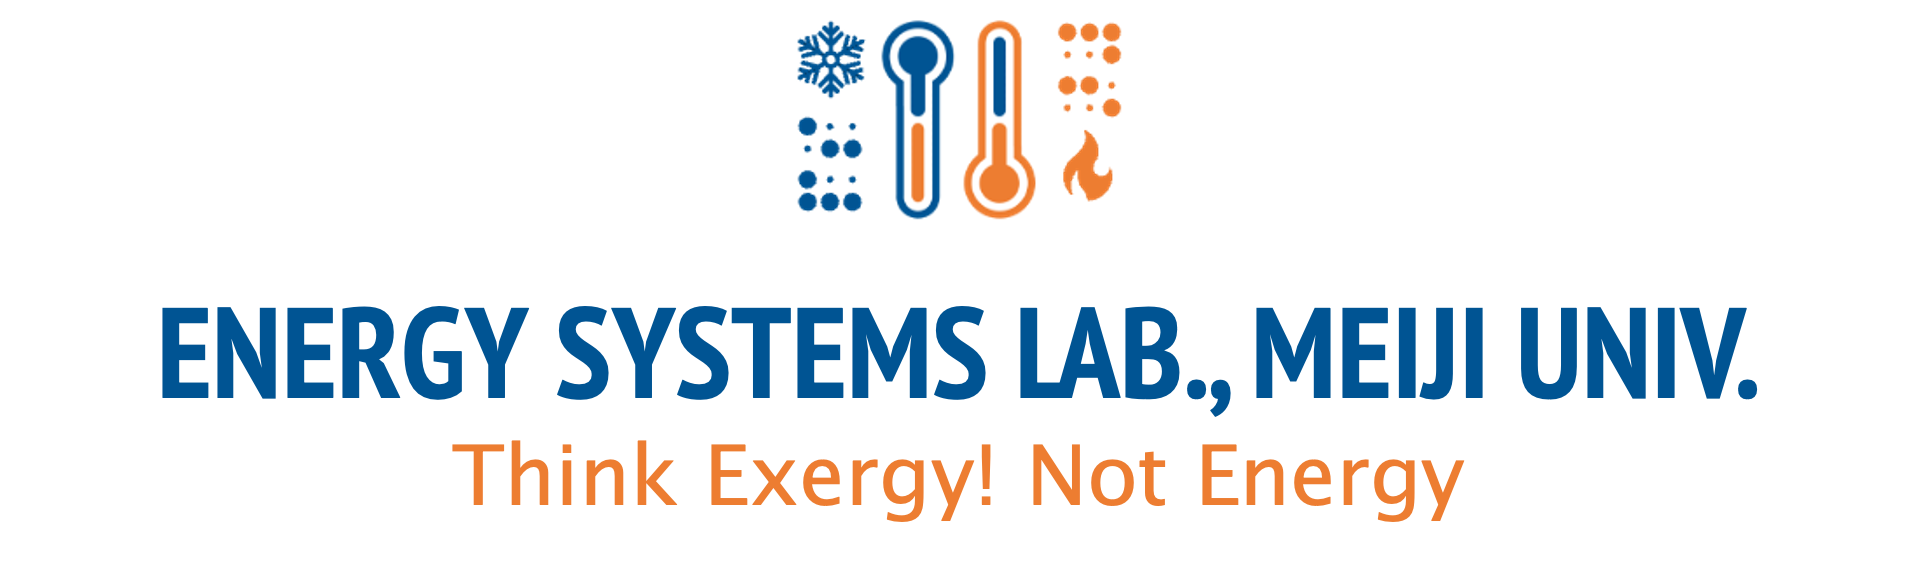 研究成果 - Energy Systems Lab., Meiji University